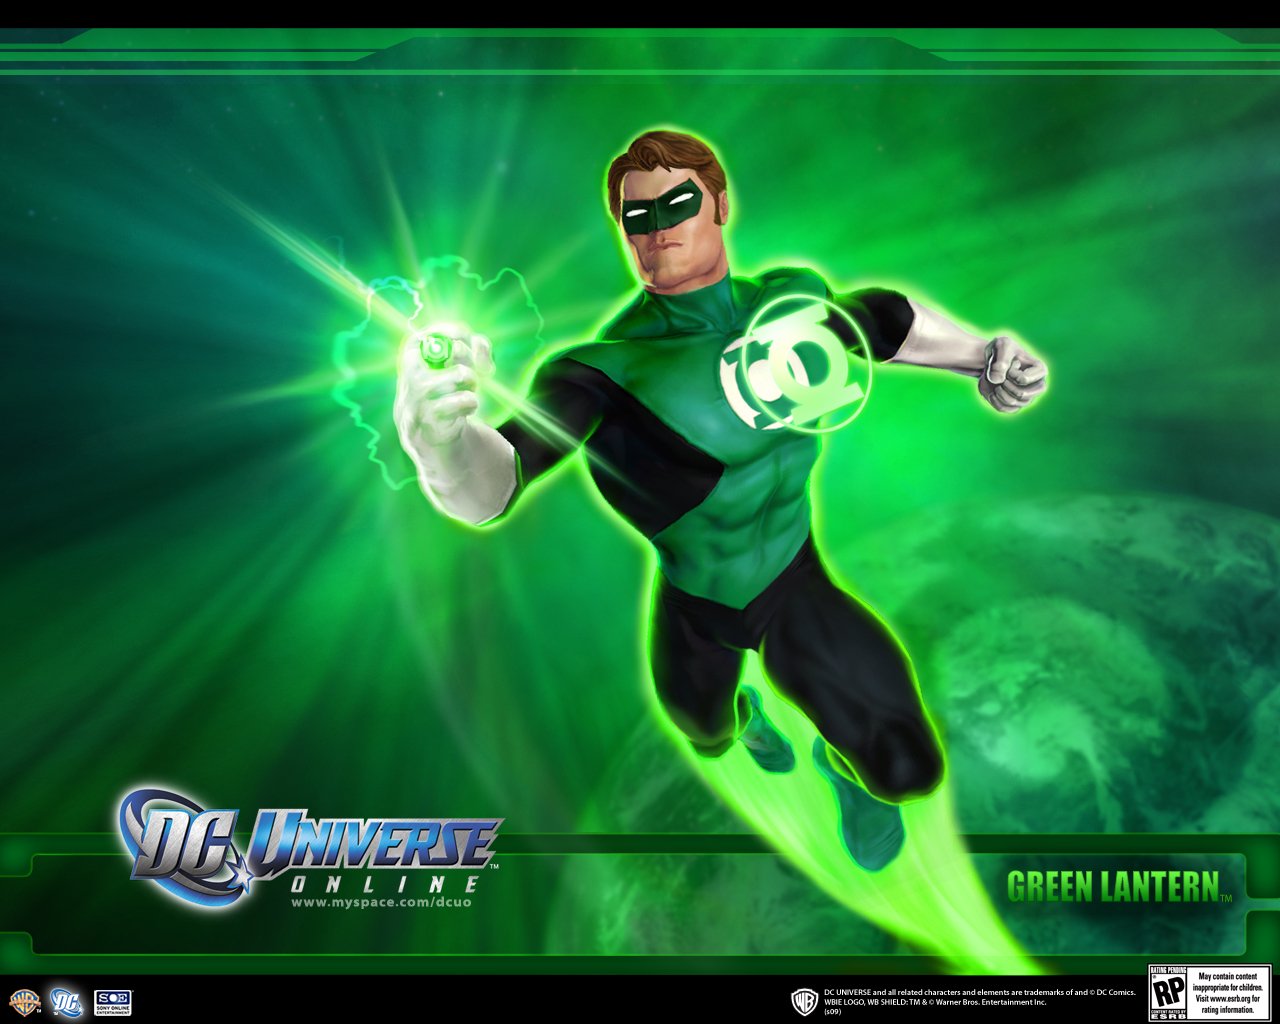 Awesome Green Lantern wallpaper Green Lantern wallpapers 1280x1024